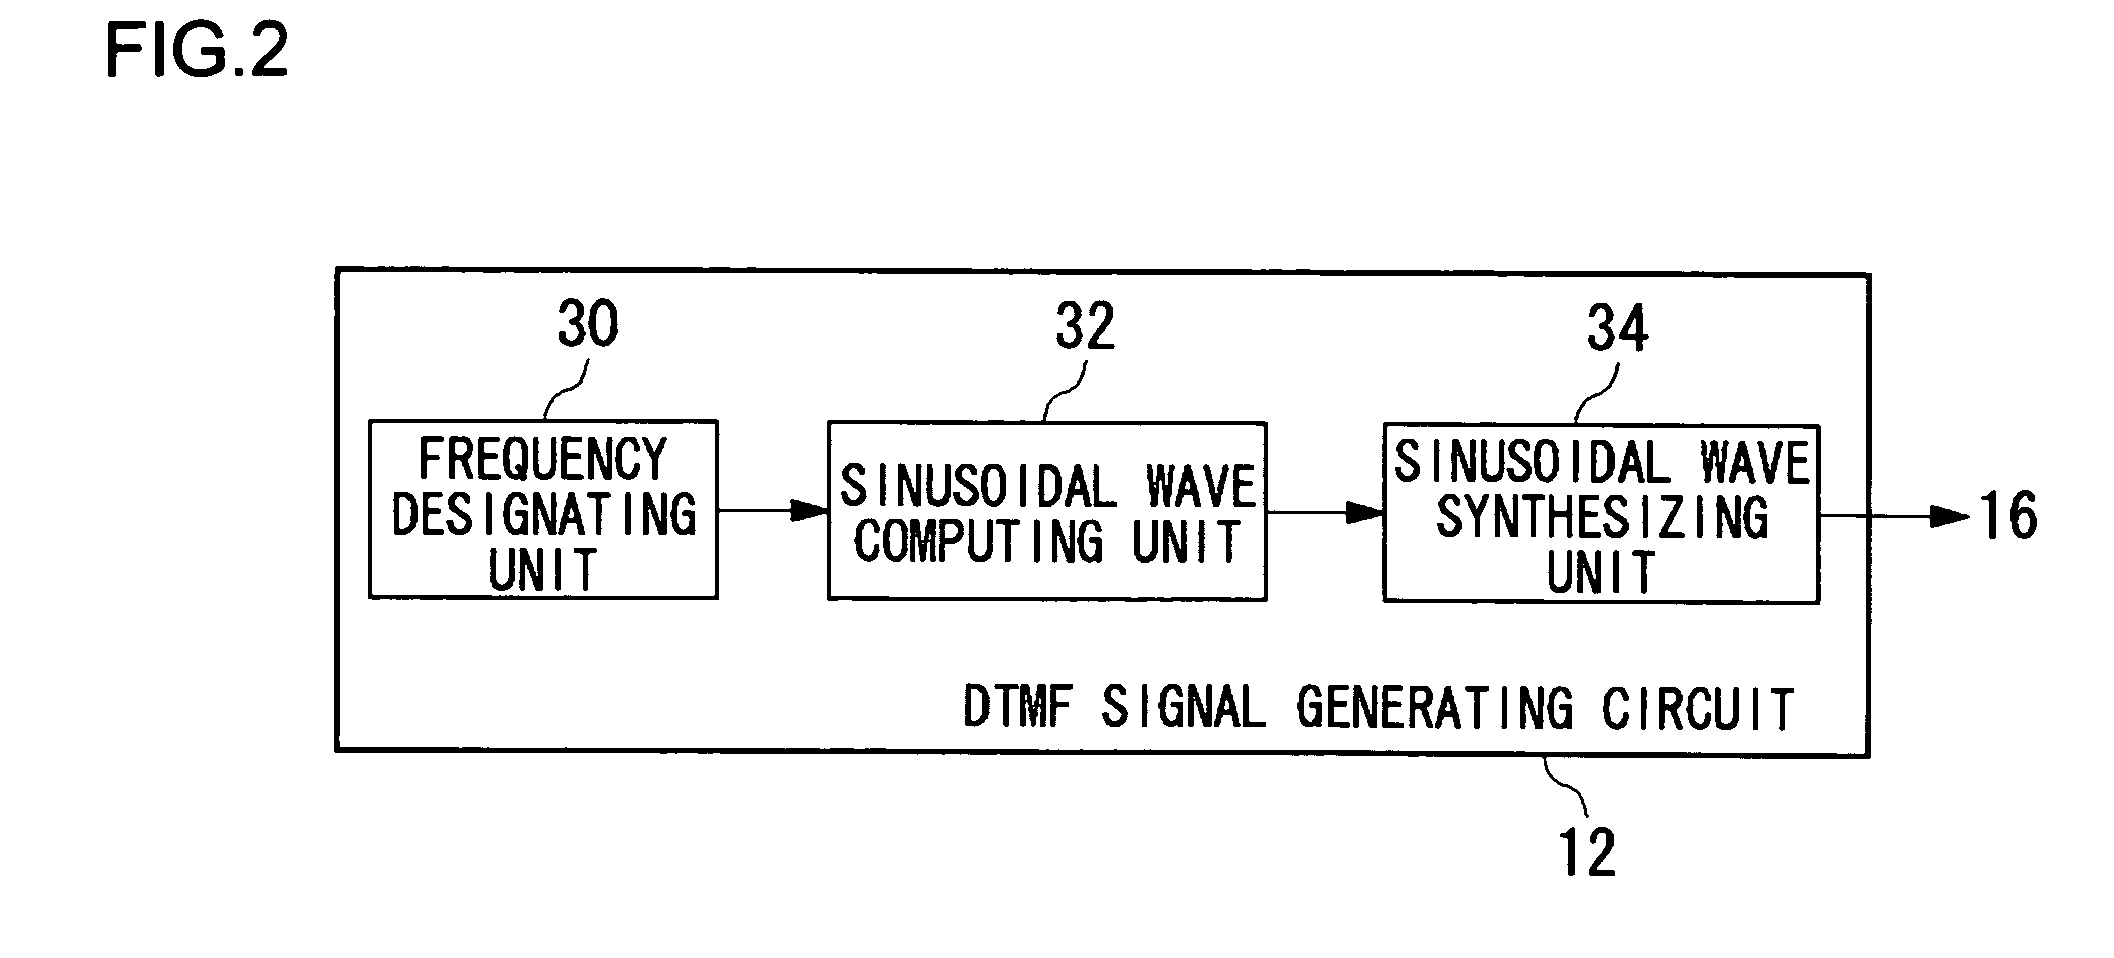 Trigonometric wave generation circuit using series expansion